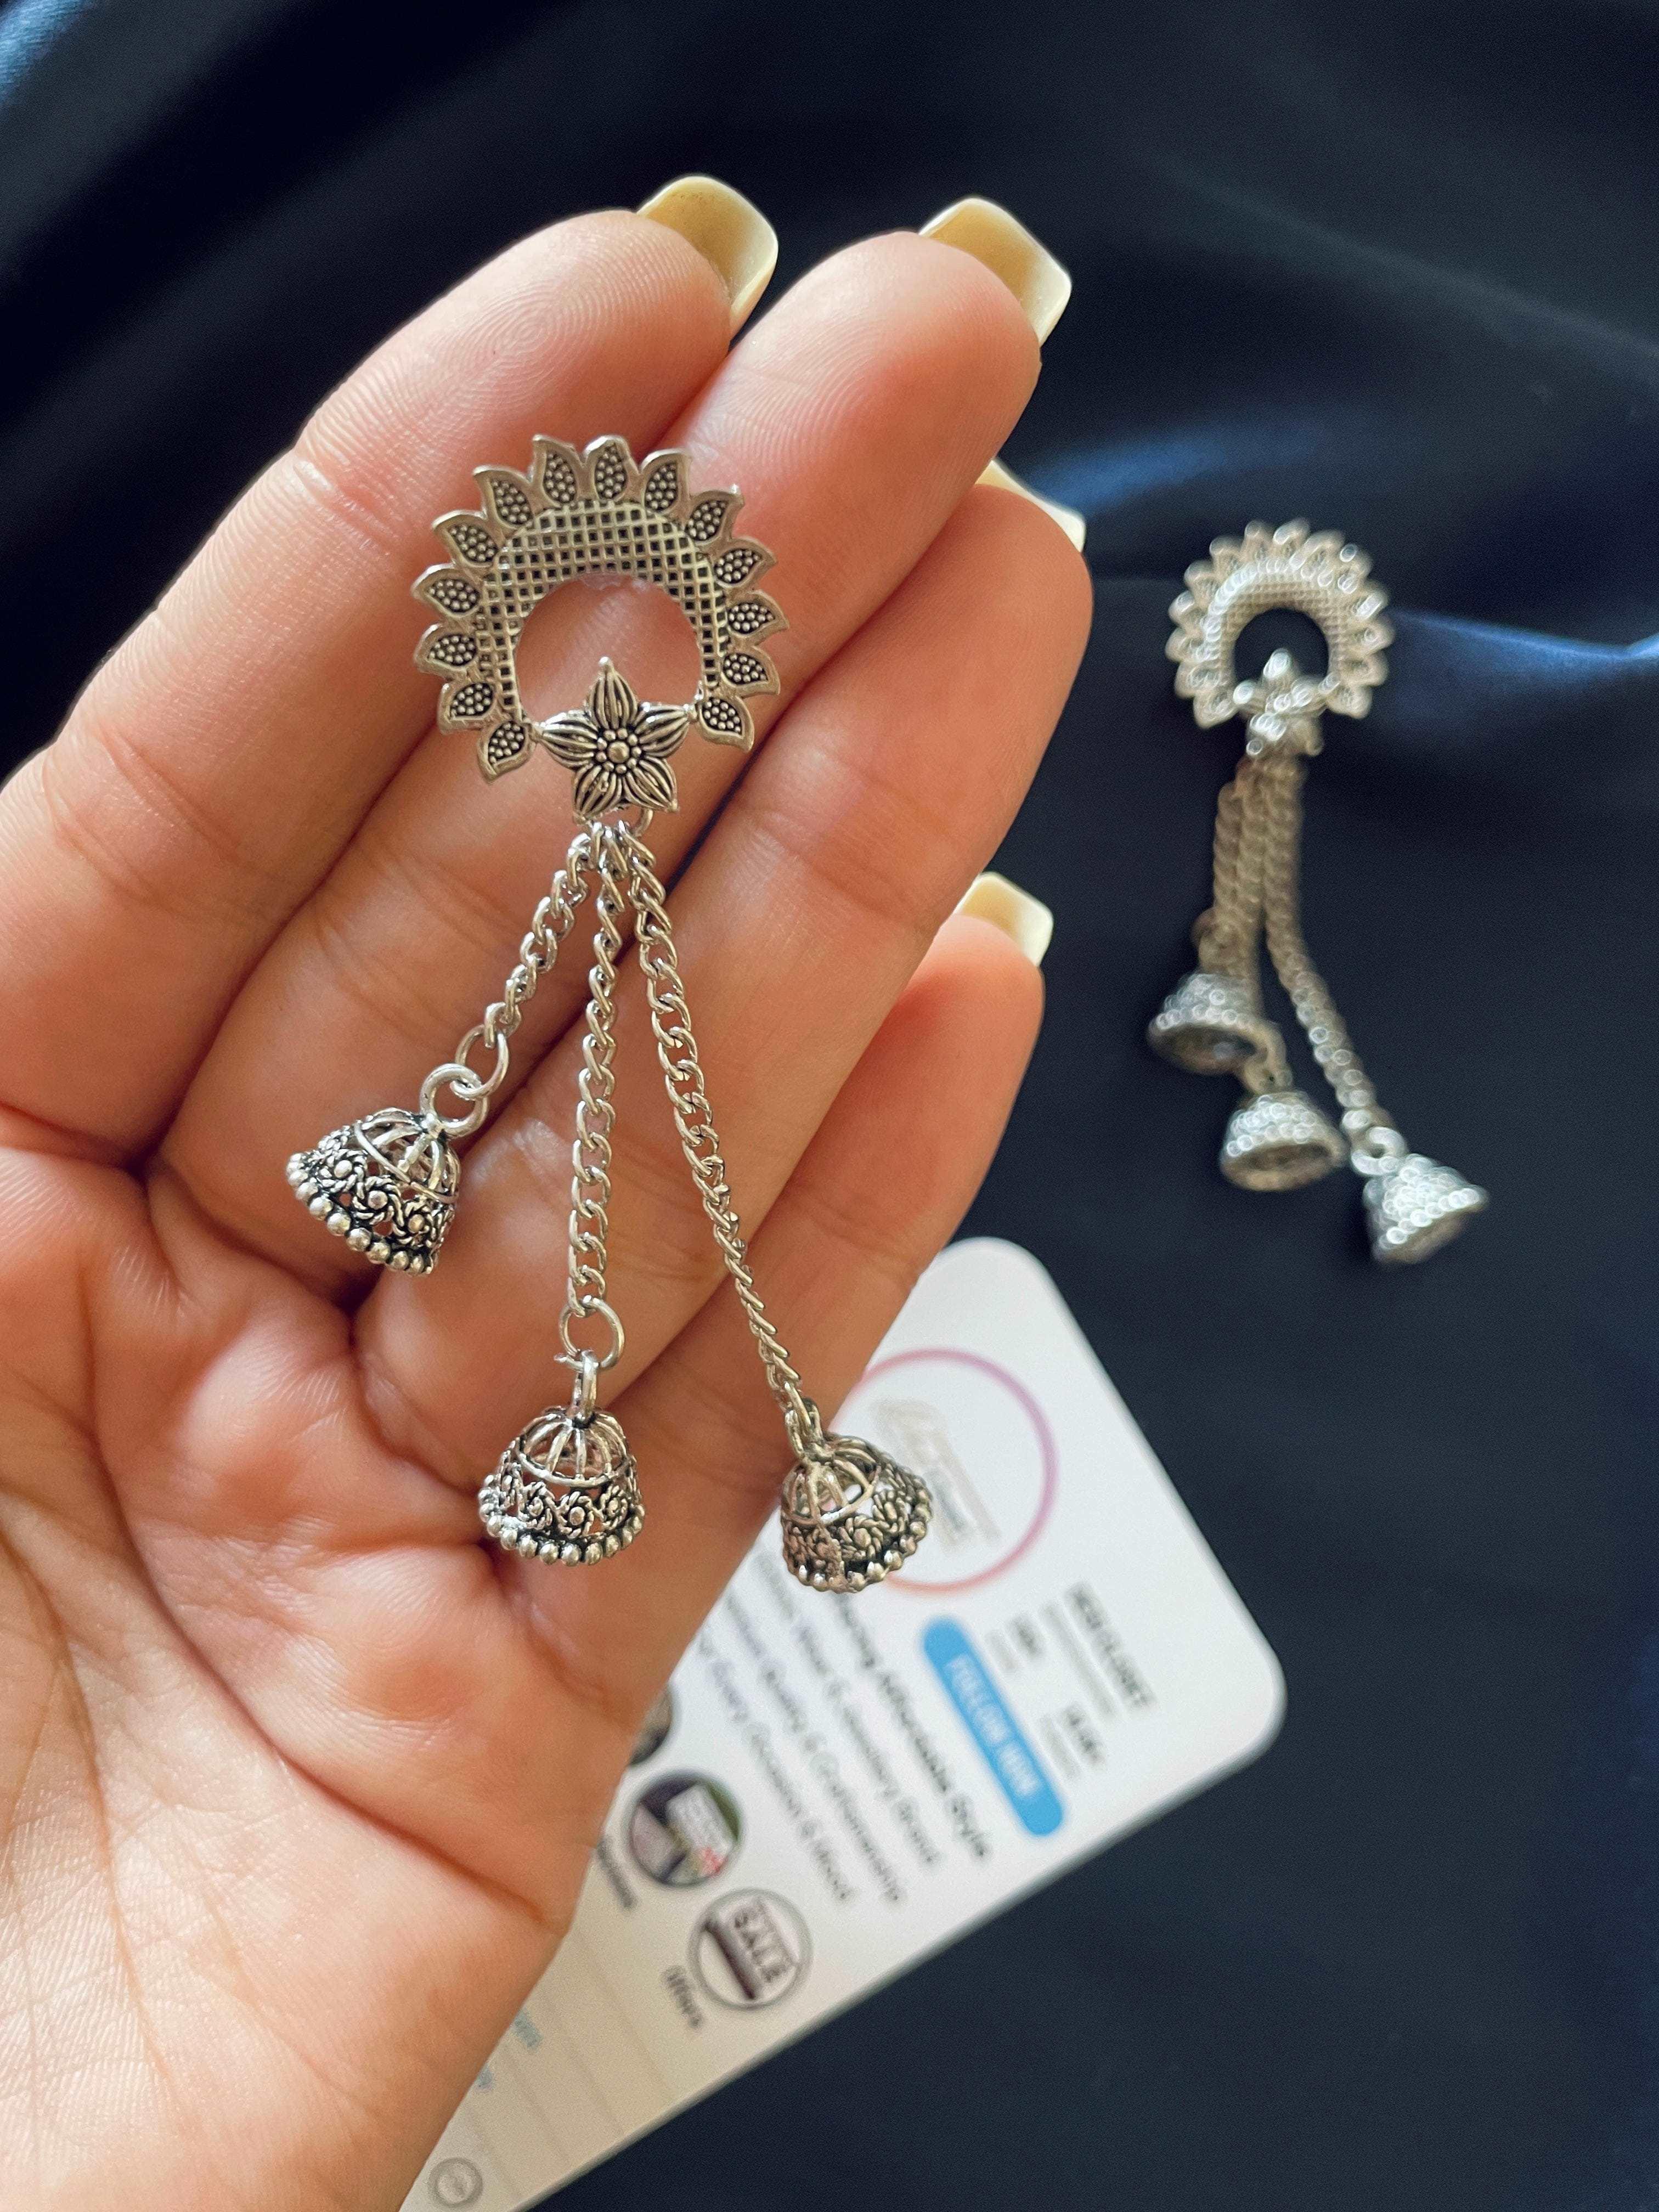 3 Tiny Jhumki Drop Silver Earrings - Desi Closet